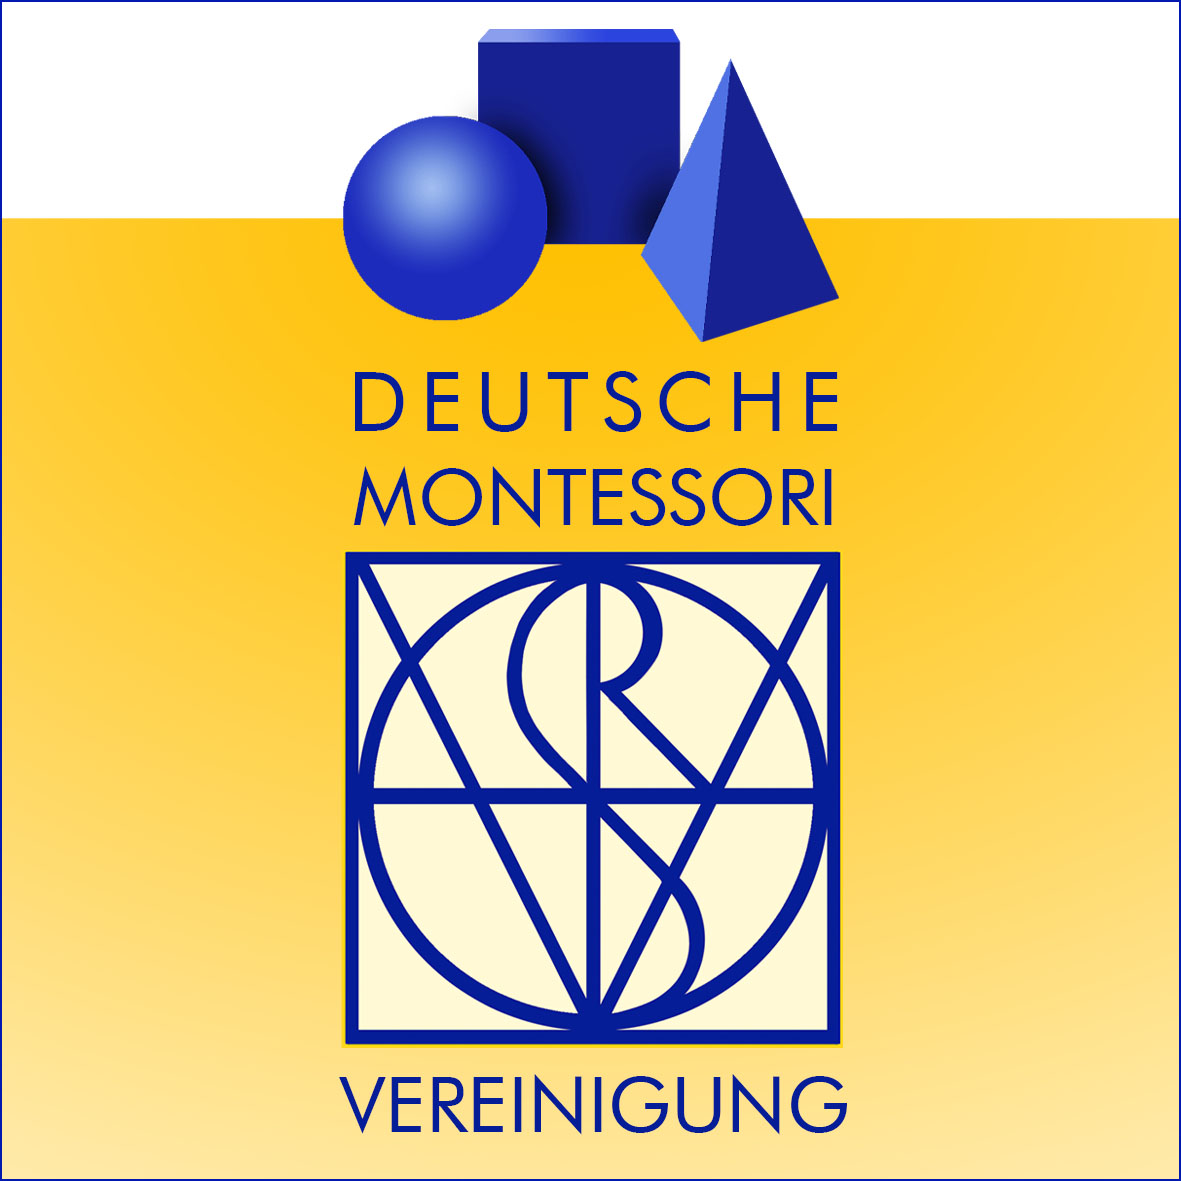 dmv logo